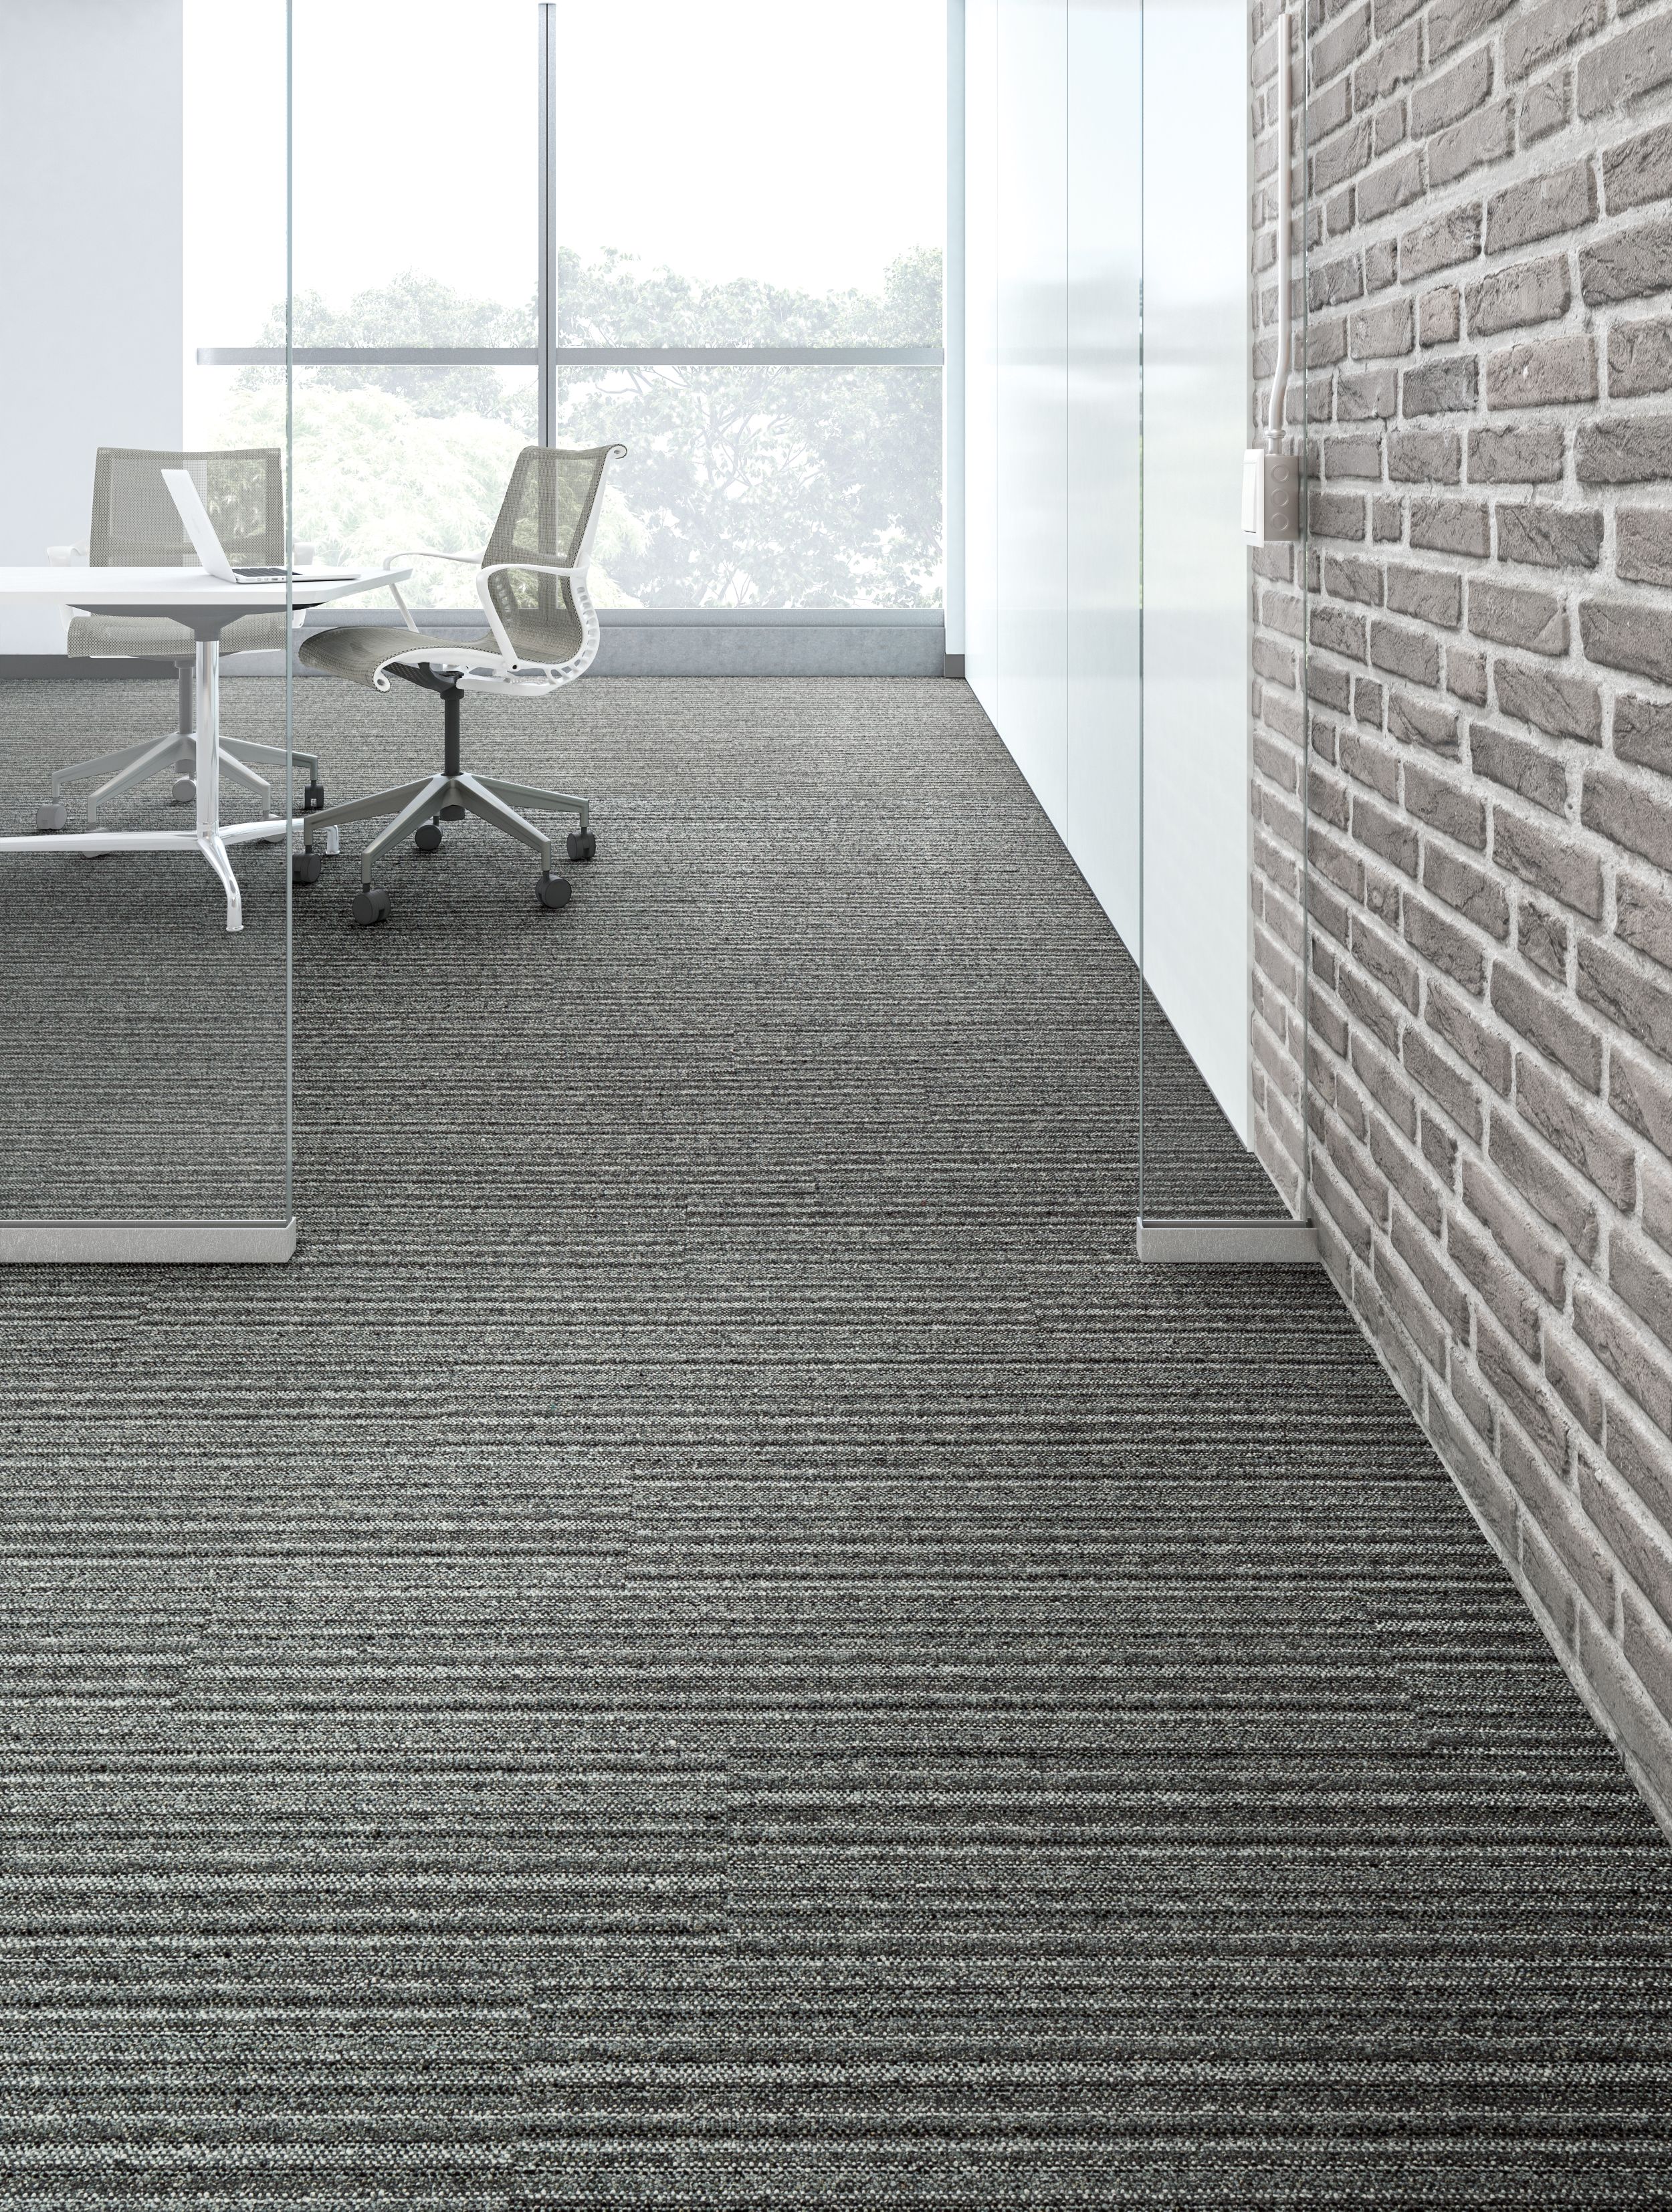 Interface WW865 plank carpet tile shown at a conference room entrance  afbeeldingnummer 8